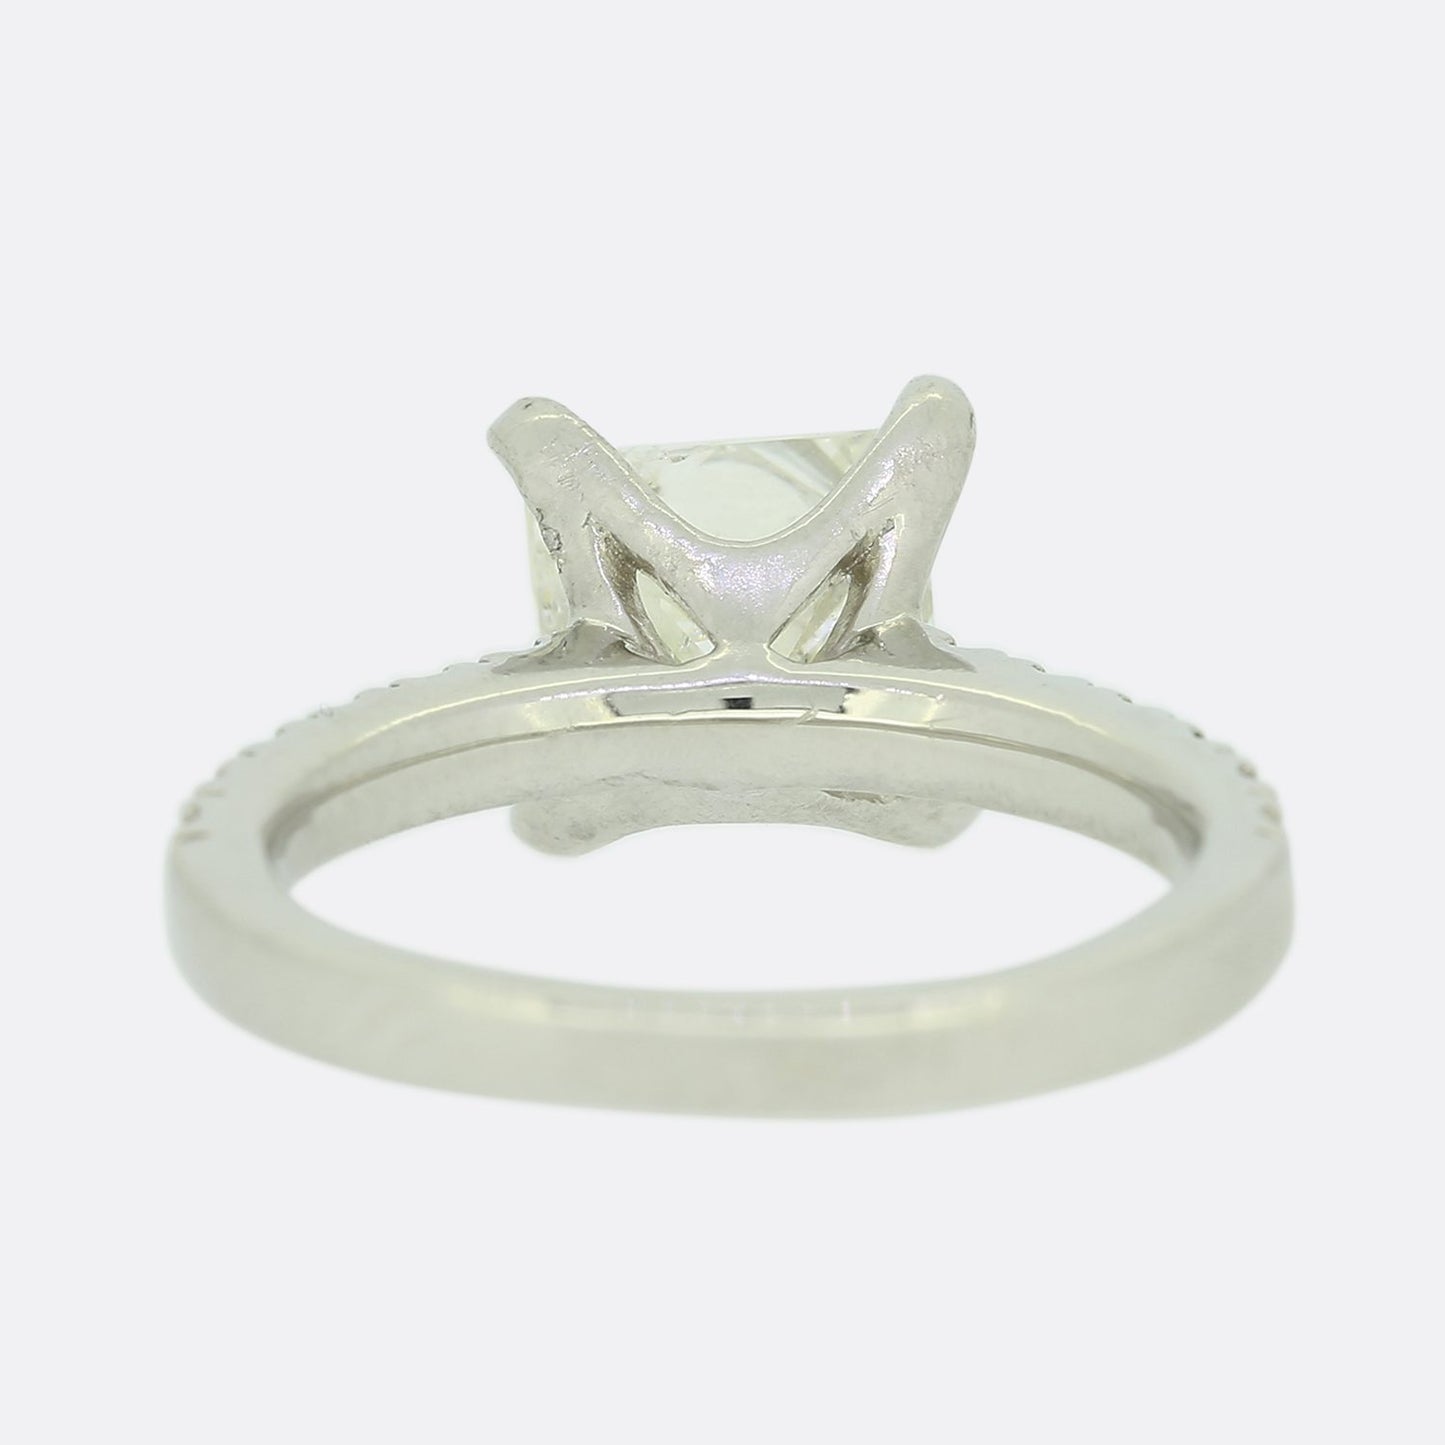 1.85 Carat Princess Cut Diamond Solitaire Engagement Ring